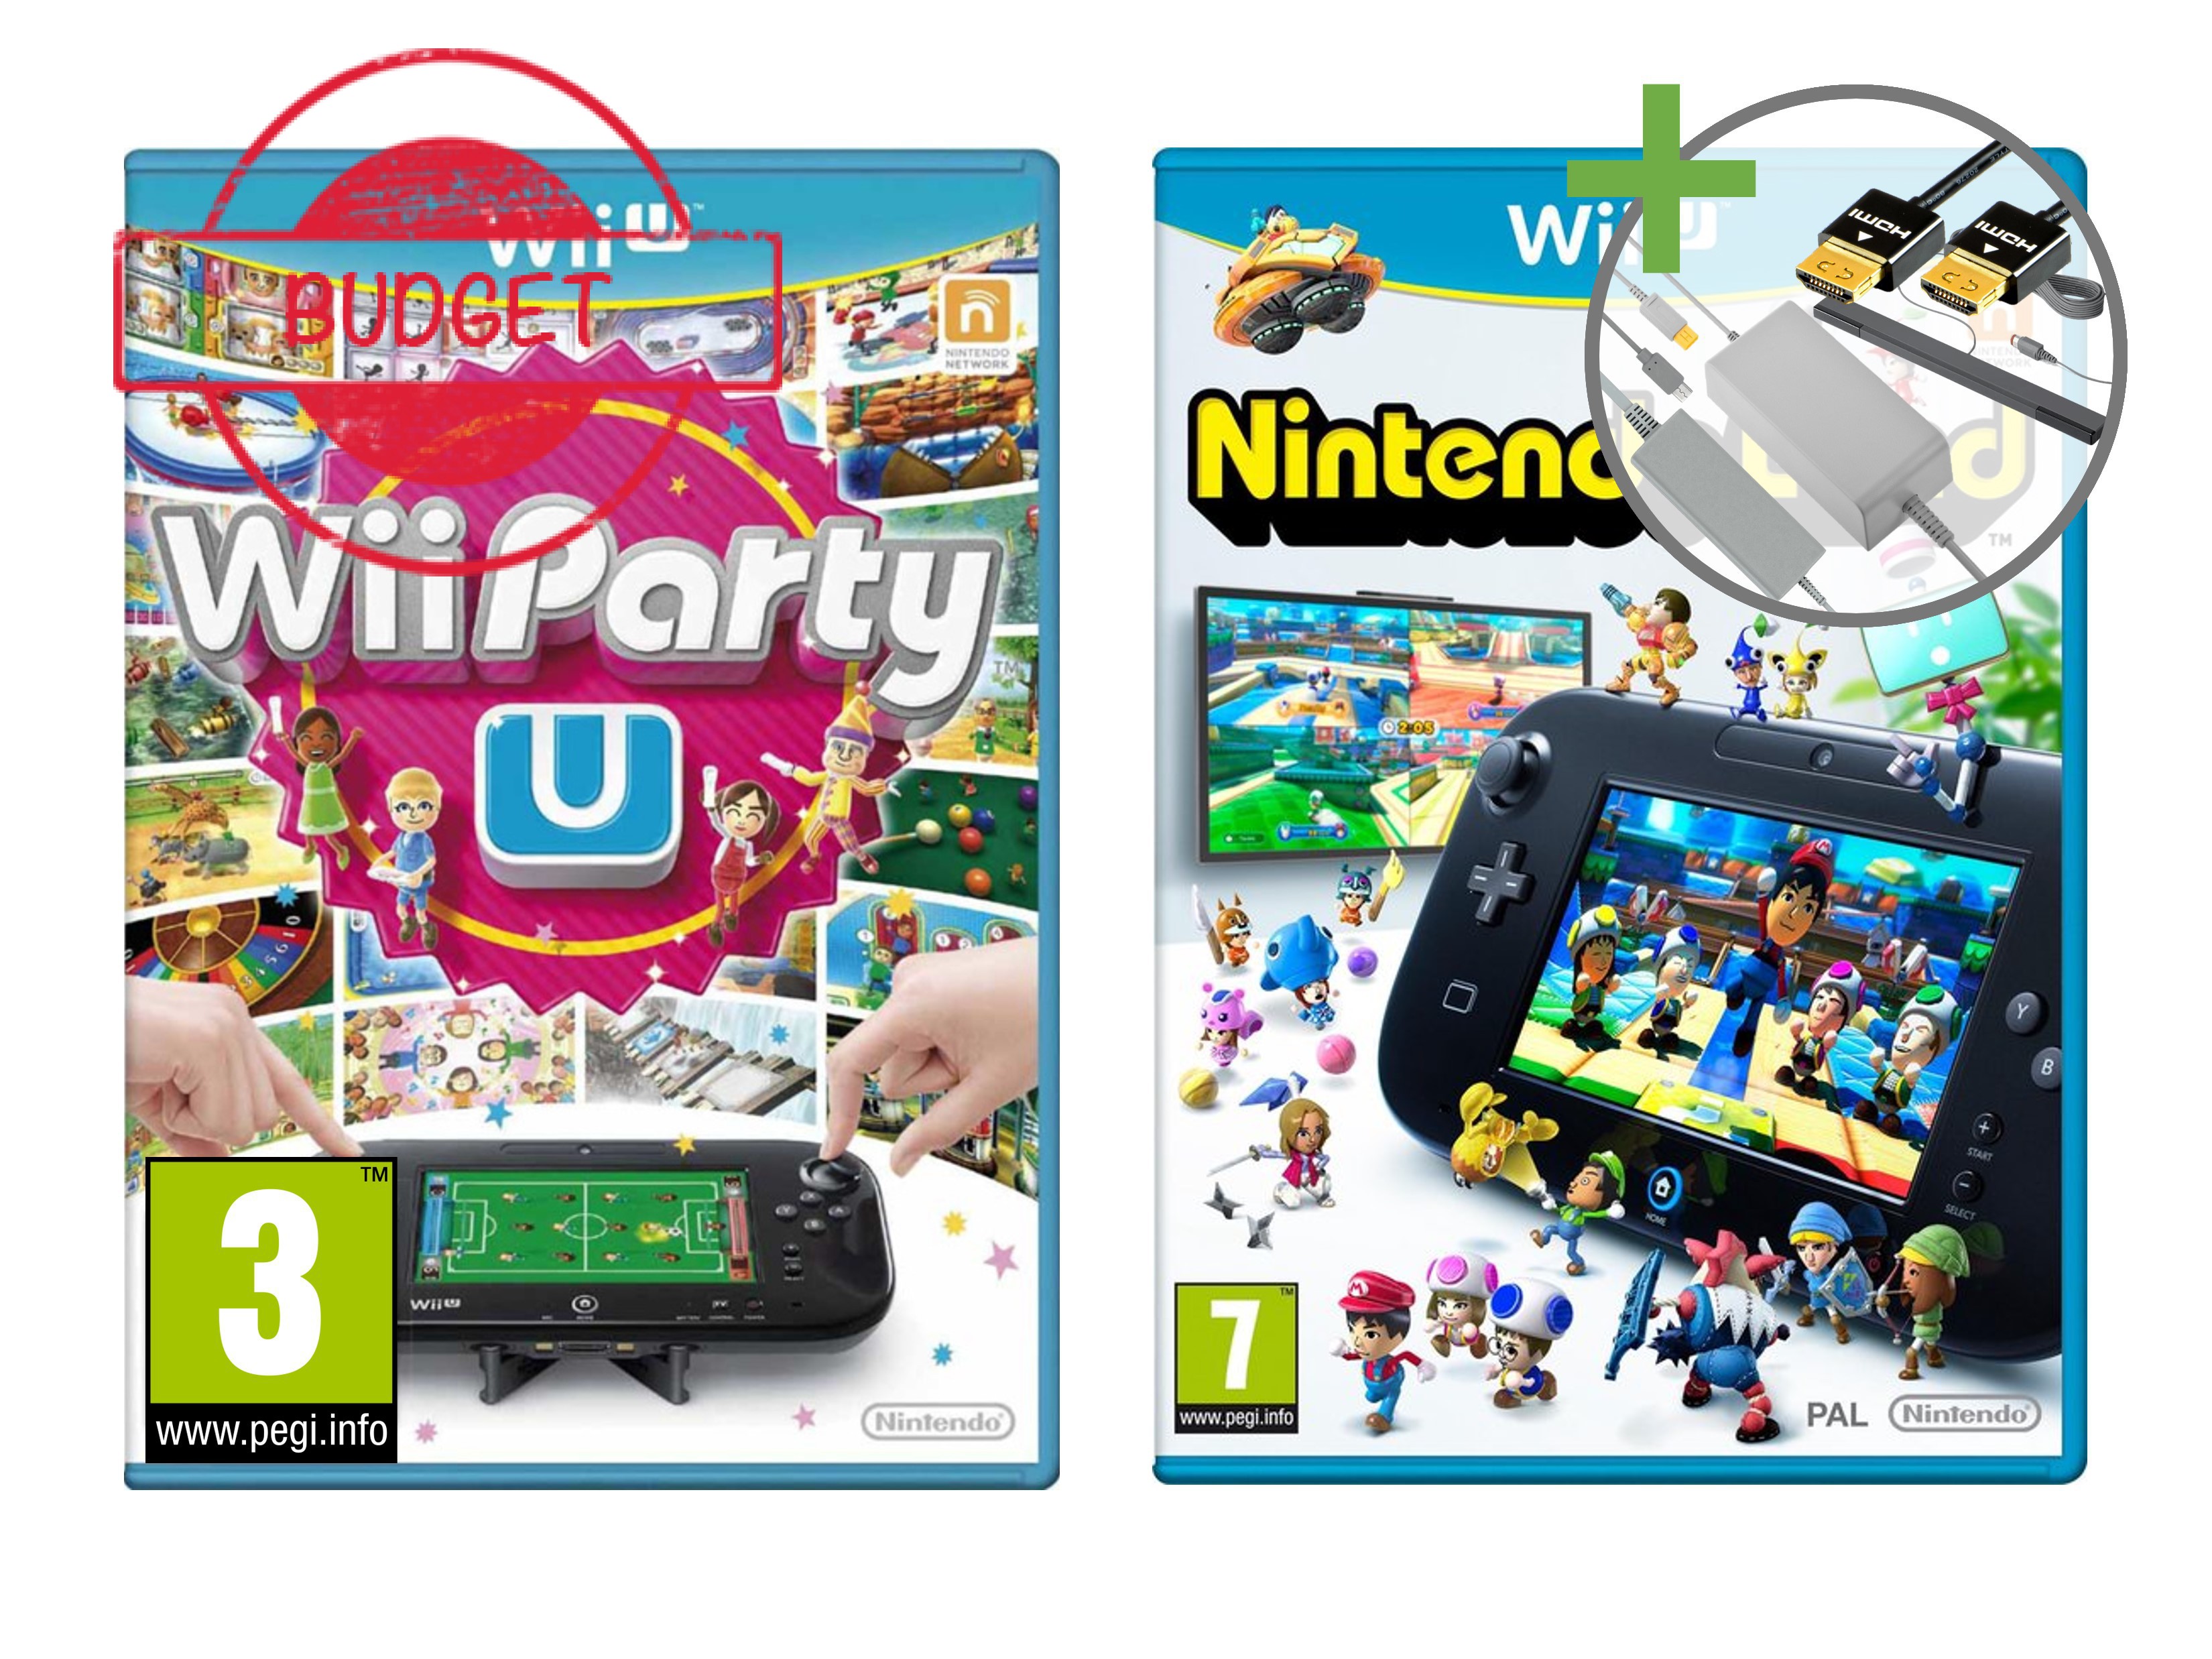 Nintendo Wii U Starter Pack - Wii Party U Edition - Budget - Wii U Hardware - 5